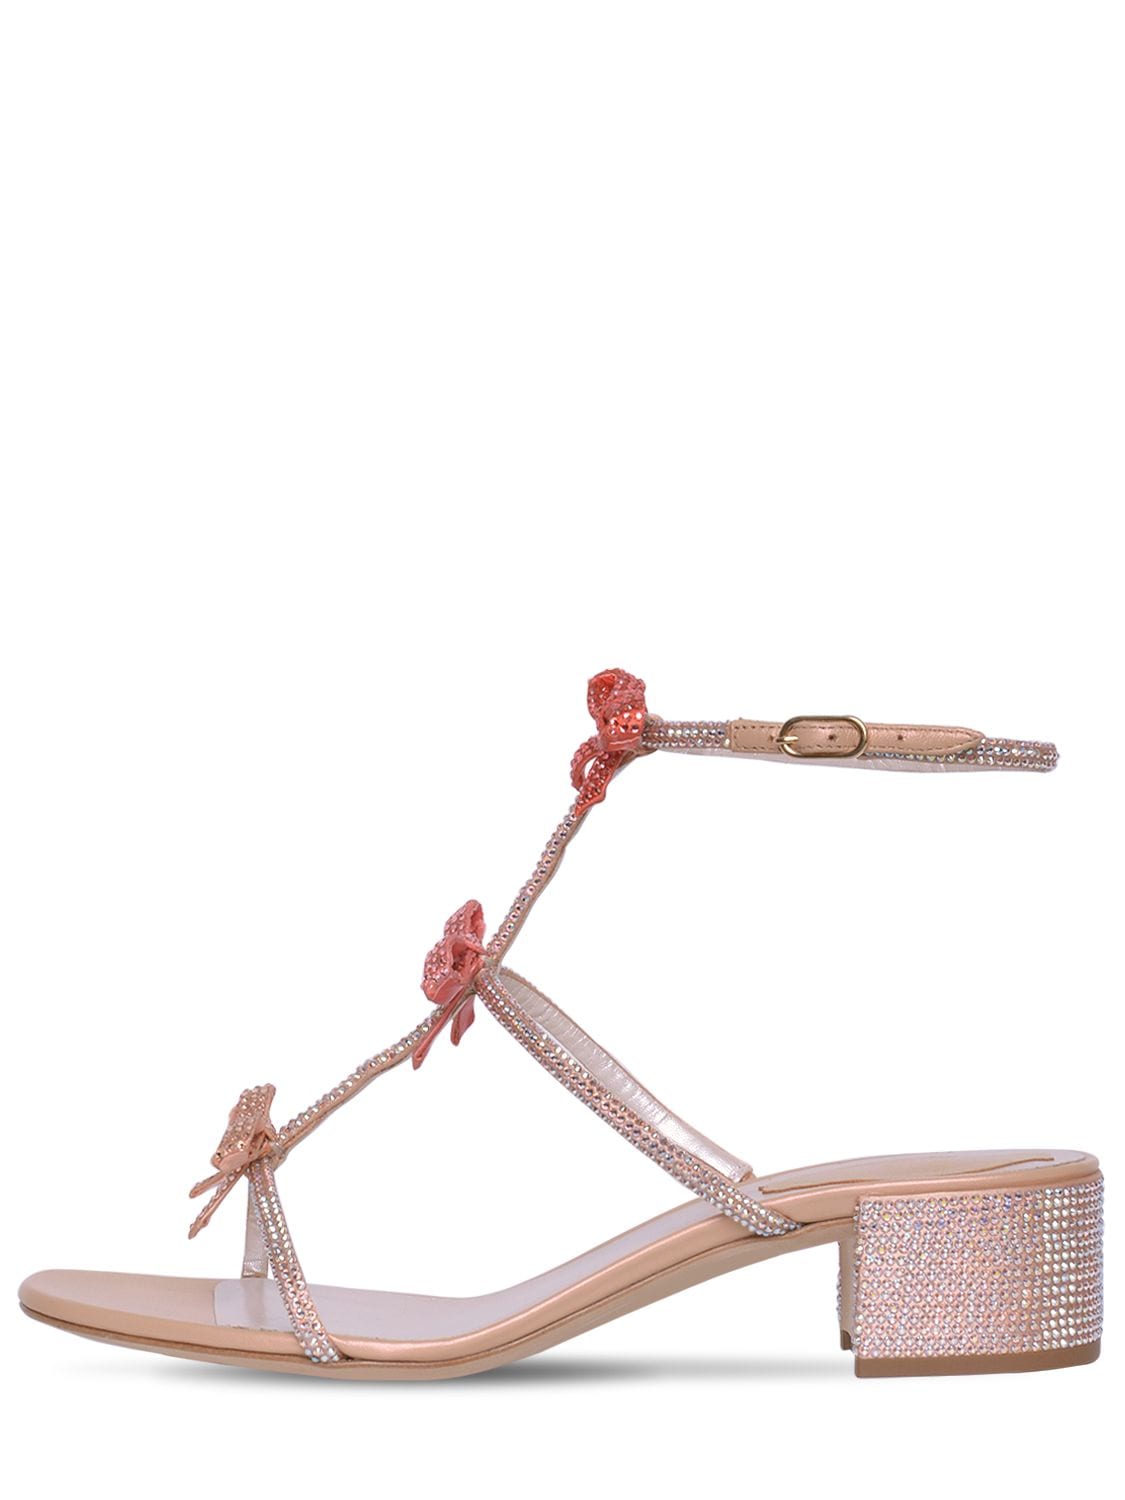 René Caovilla 40mm Satin & Crystal Sandals In Pink